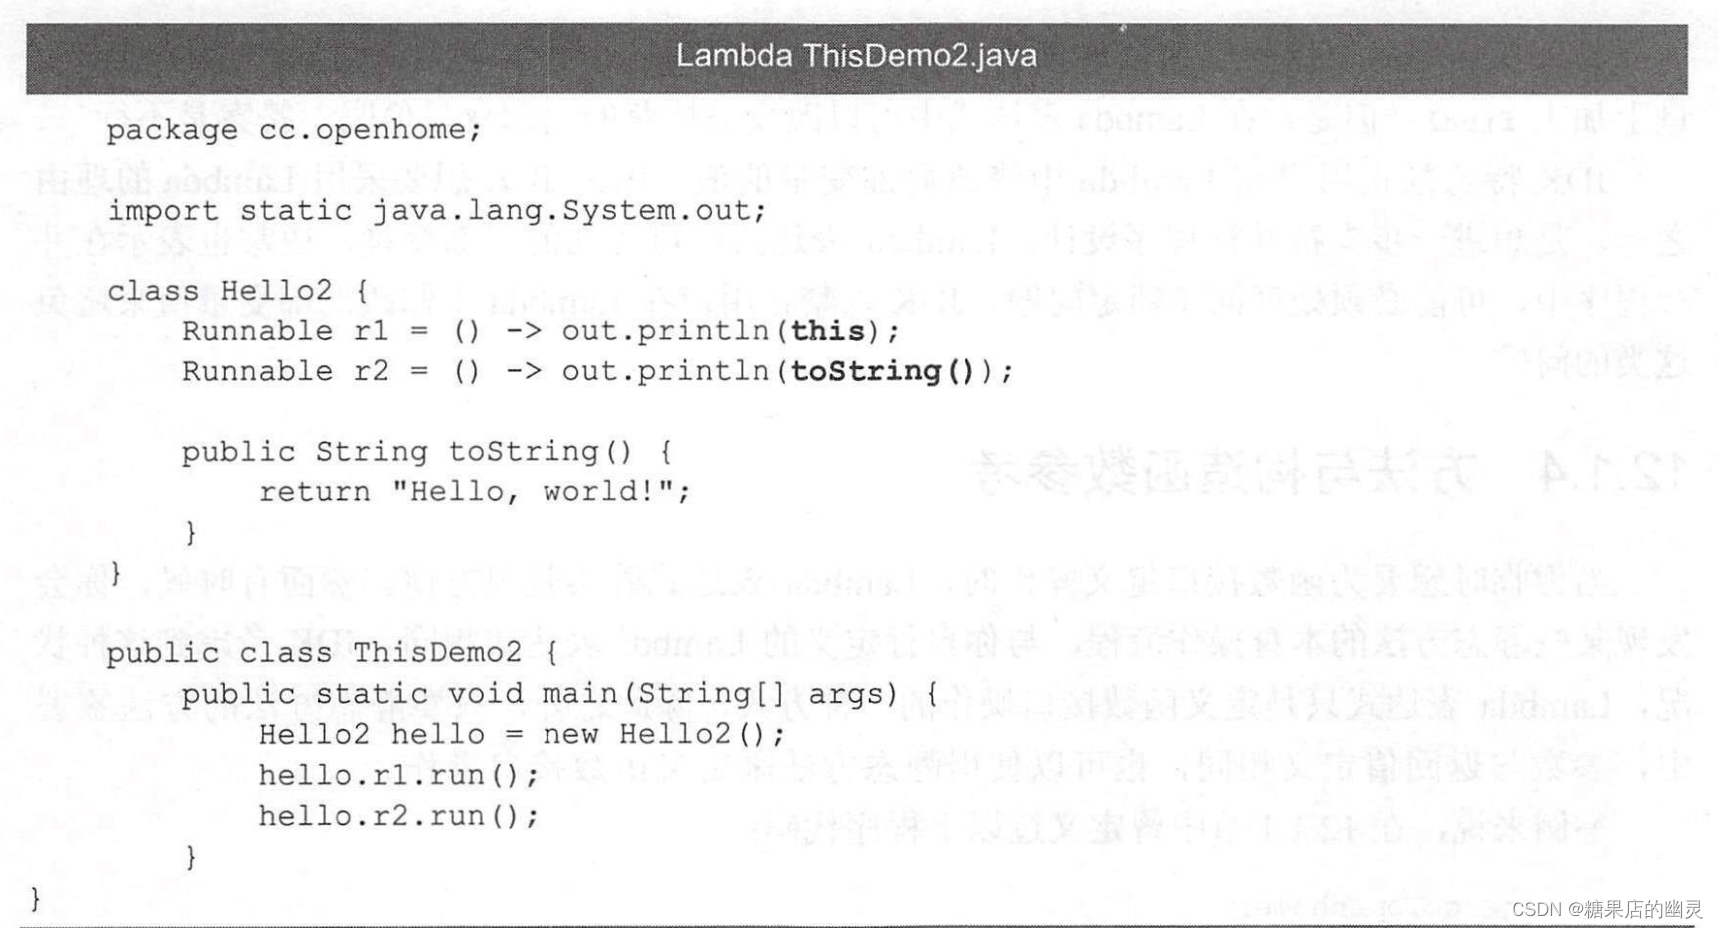 java-Lambda 语法总结